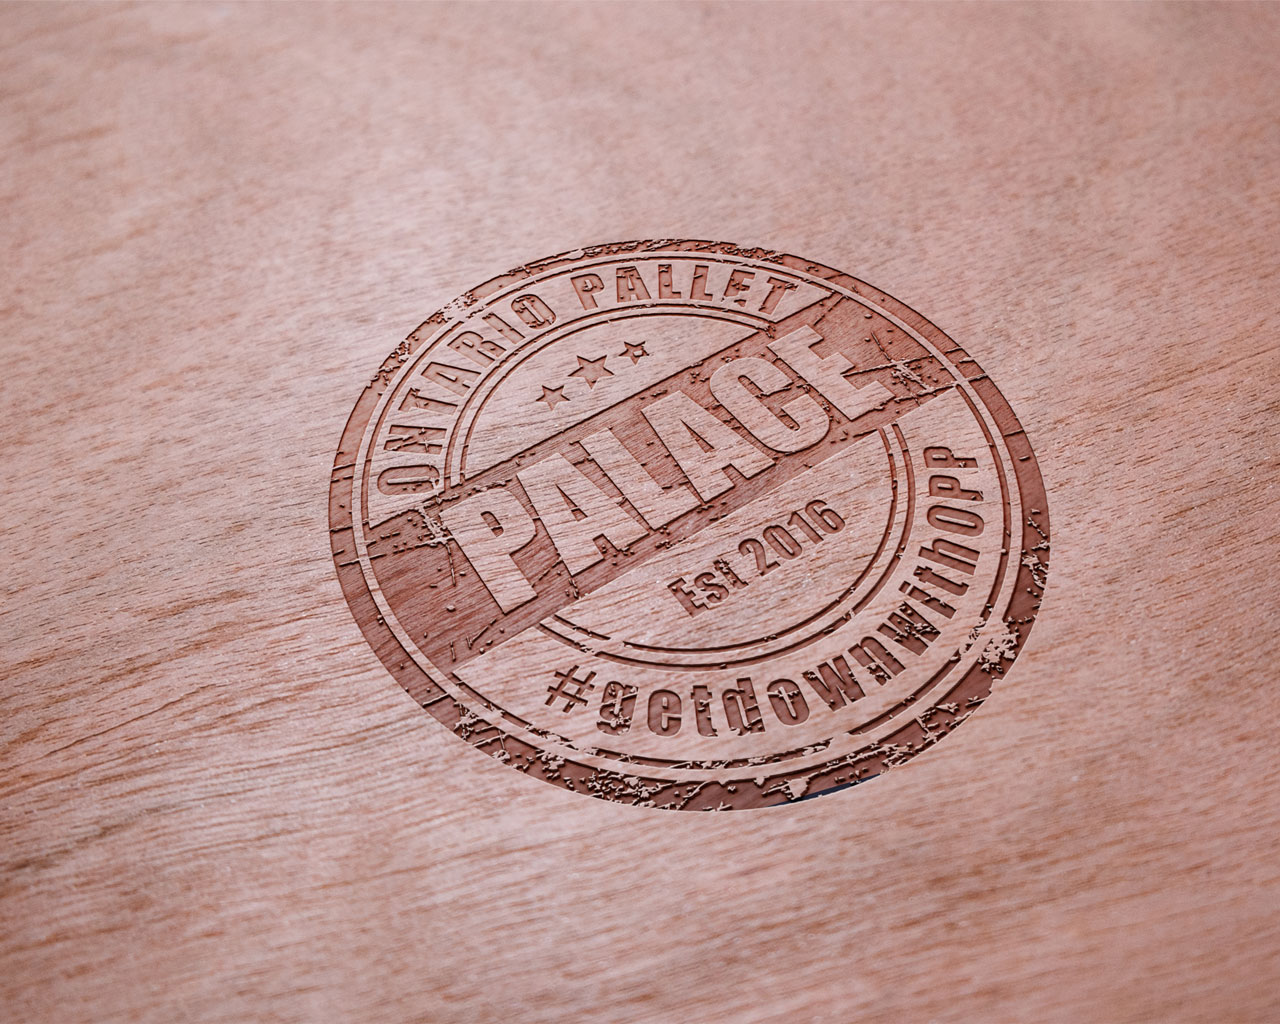 Ontario pallet palace logo design by scr enter dibyendu roy rubber mock up presentation on plywood surface